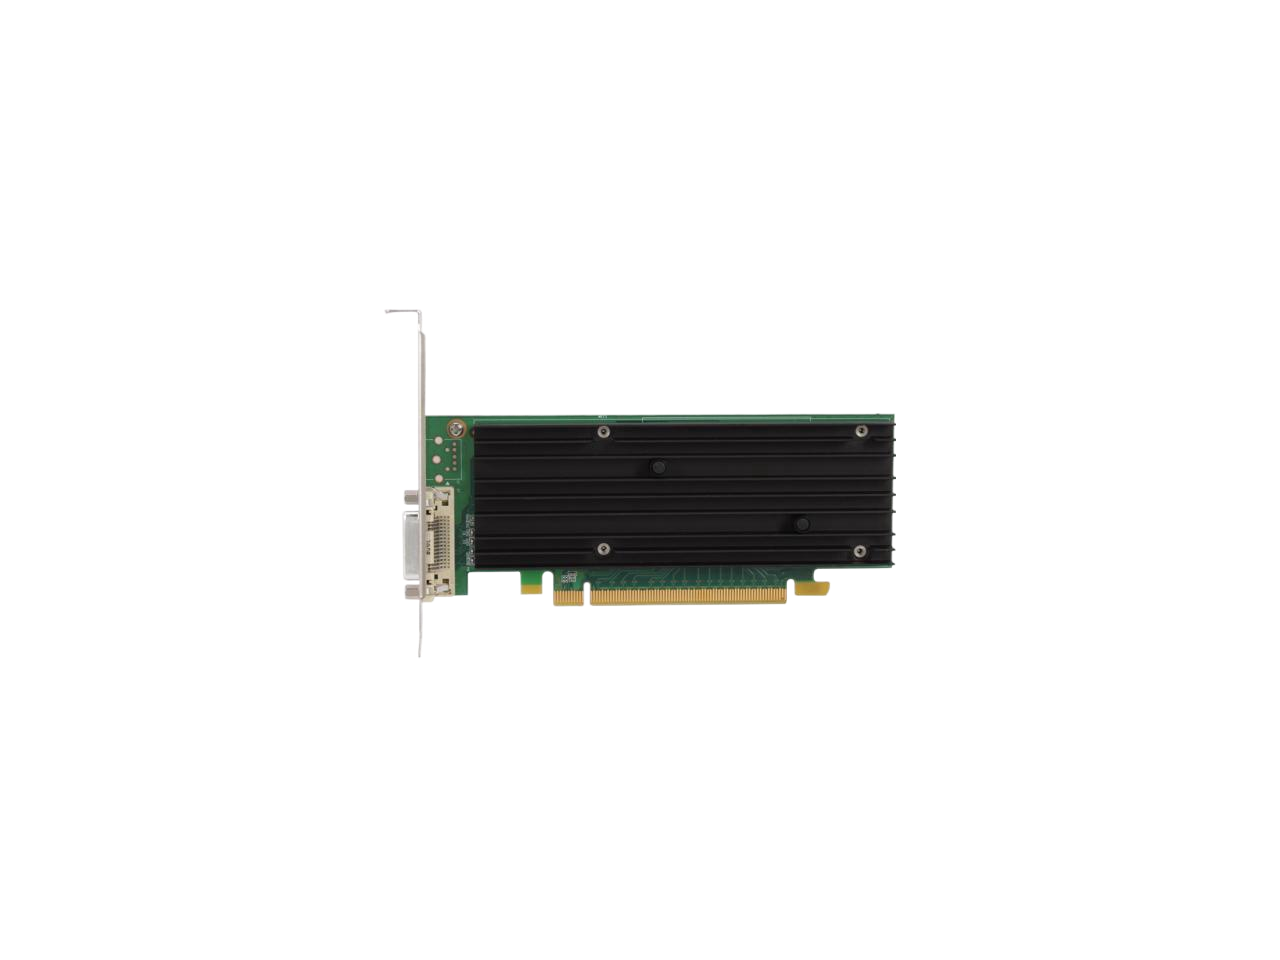 PNY NVIDIA Quadro NVS 290 256MB Express x1 Video card +VGA Cord VCQ290NVS-PCIEX1